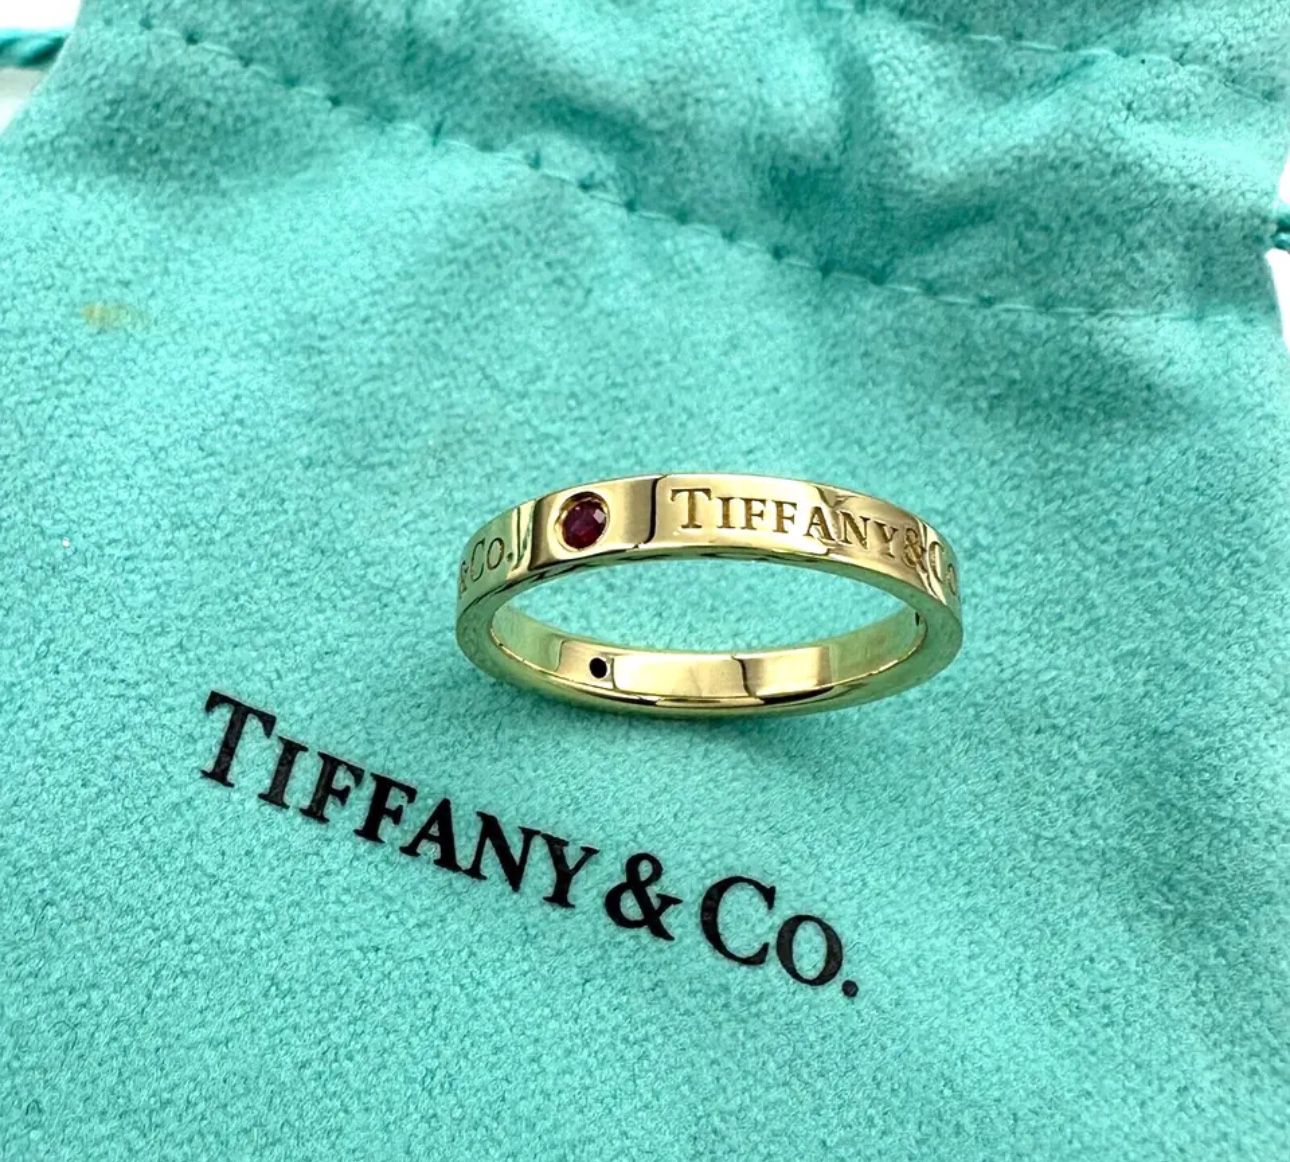 Tiffany & Co. 18k Yellow Gold & Rubies Band Ring